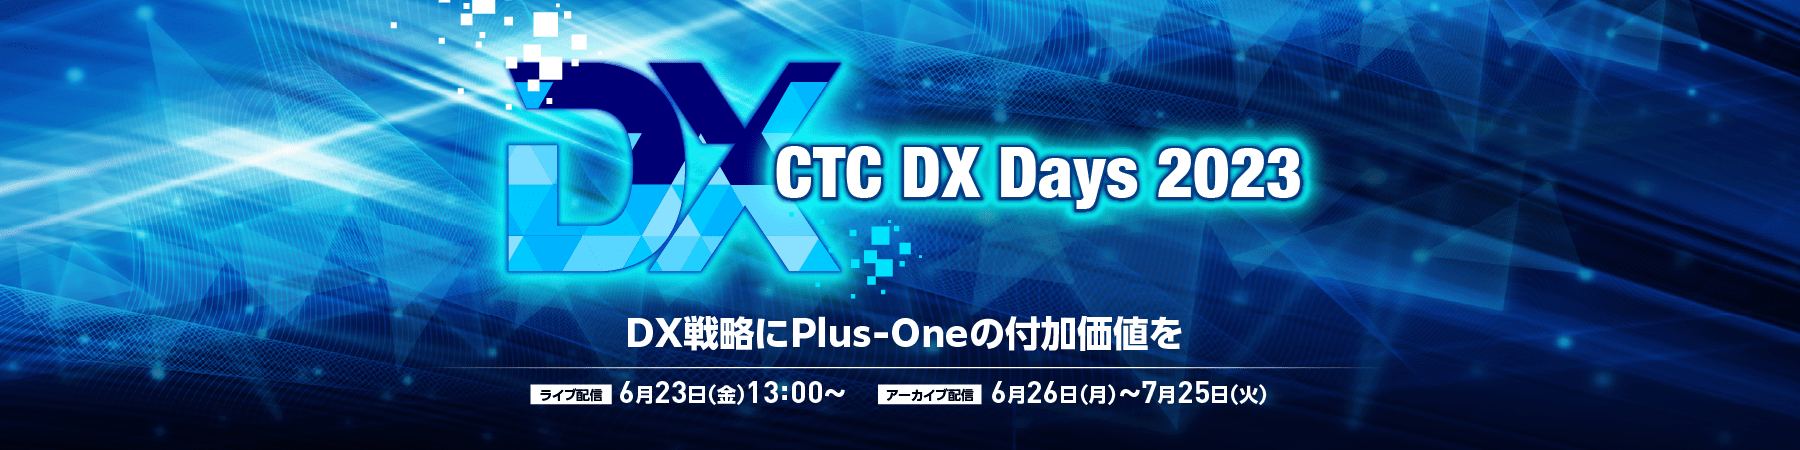 CTC DX Days 2023「DX戦略にPlus-Oneの付加価値を」